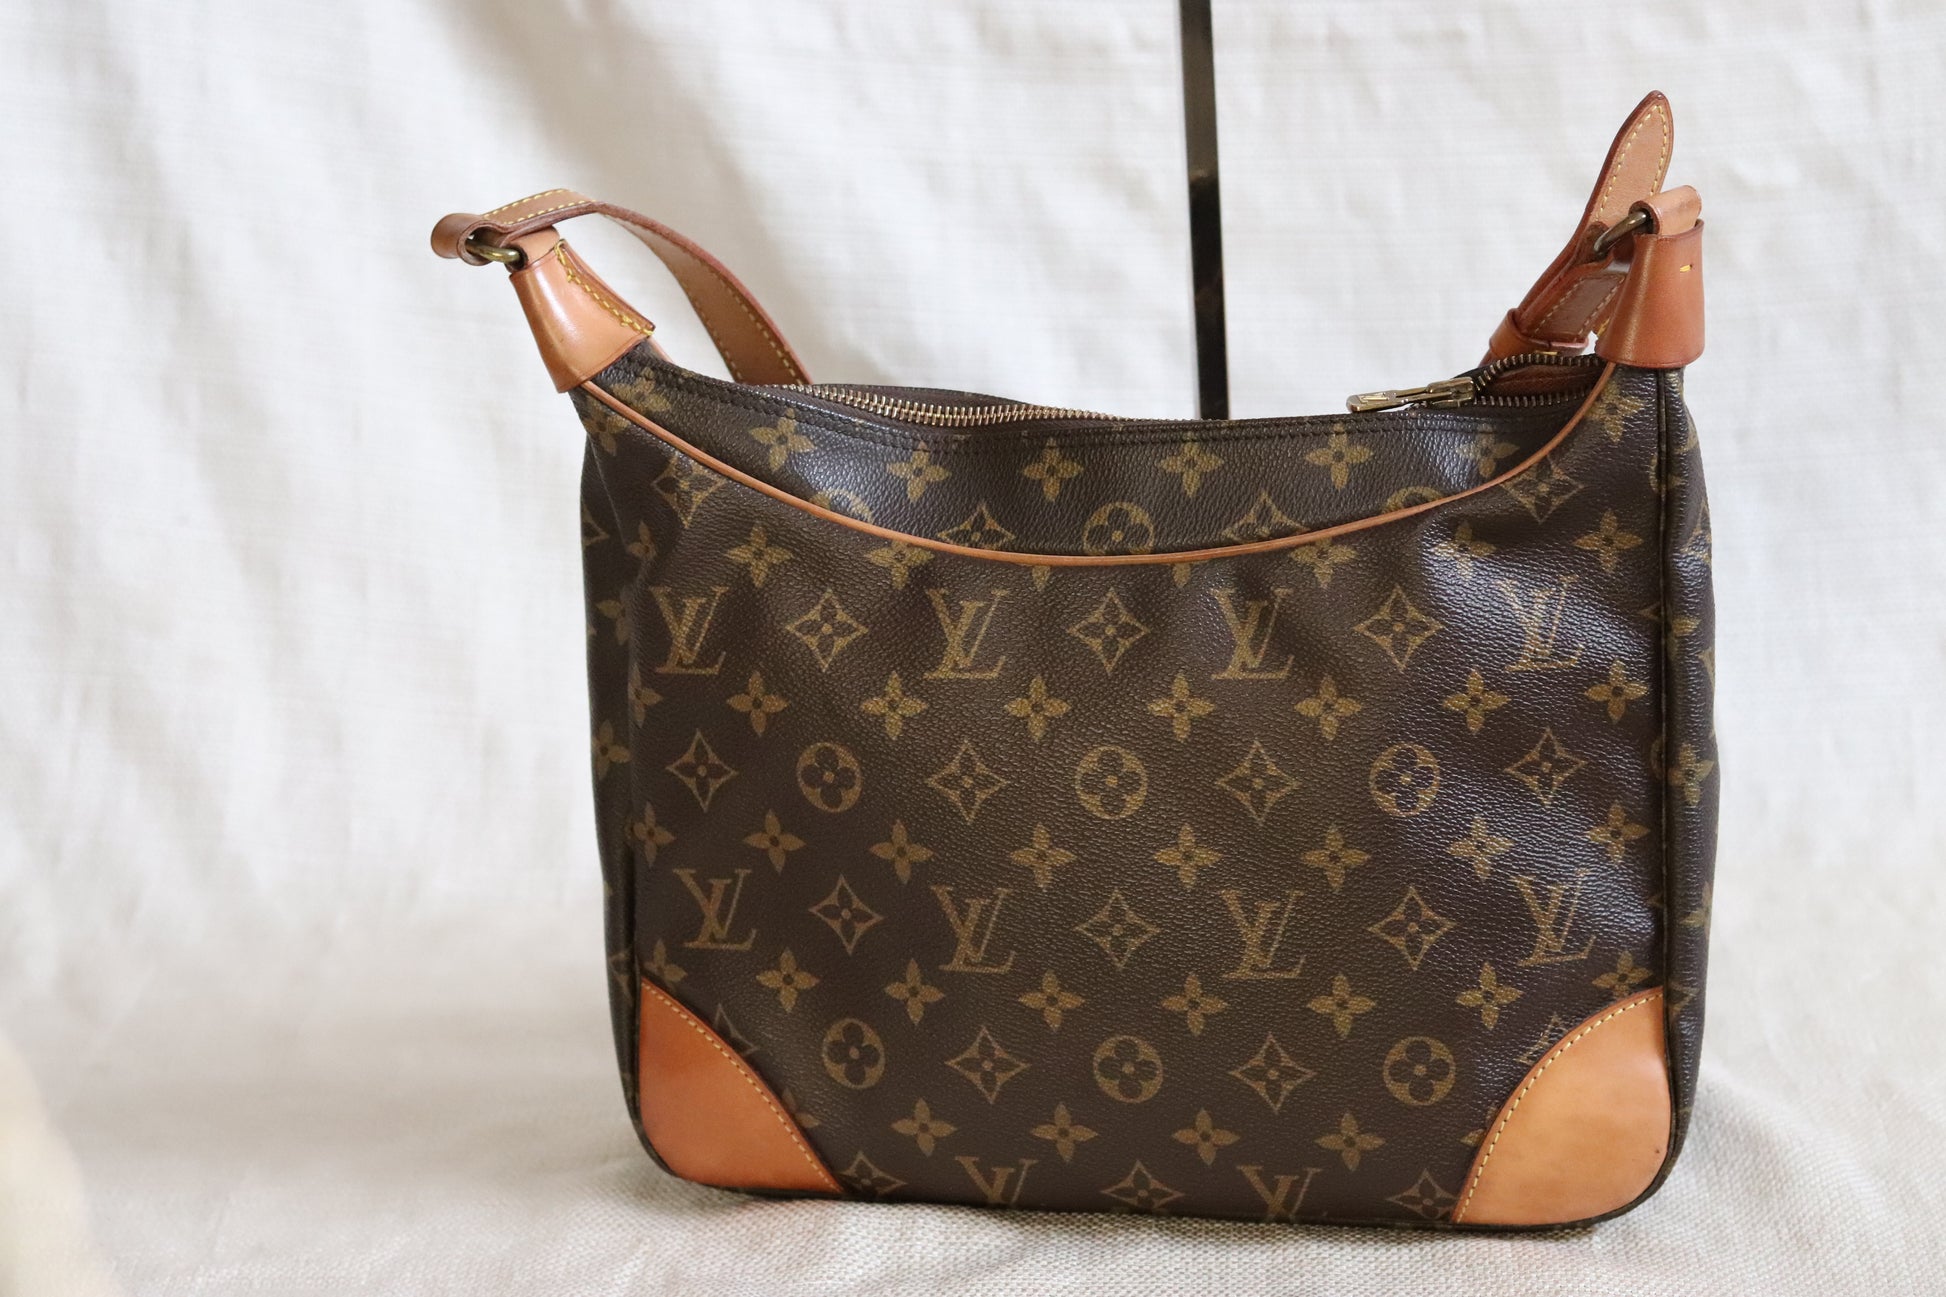 Unbox my Louis Vuitton Boulogne bag with me! #SmoothLikeNitroPepsi